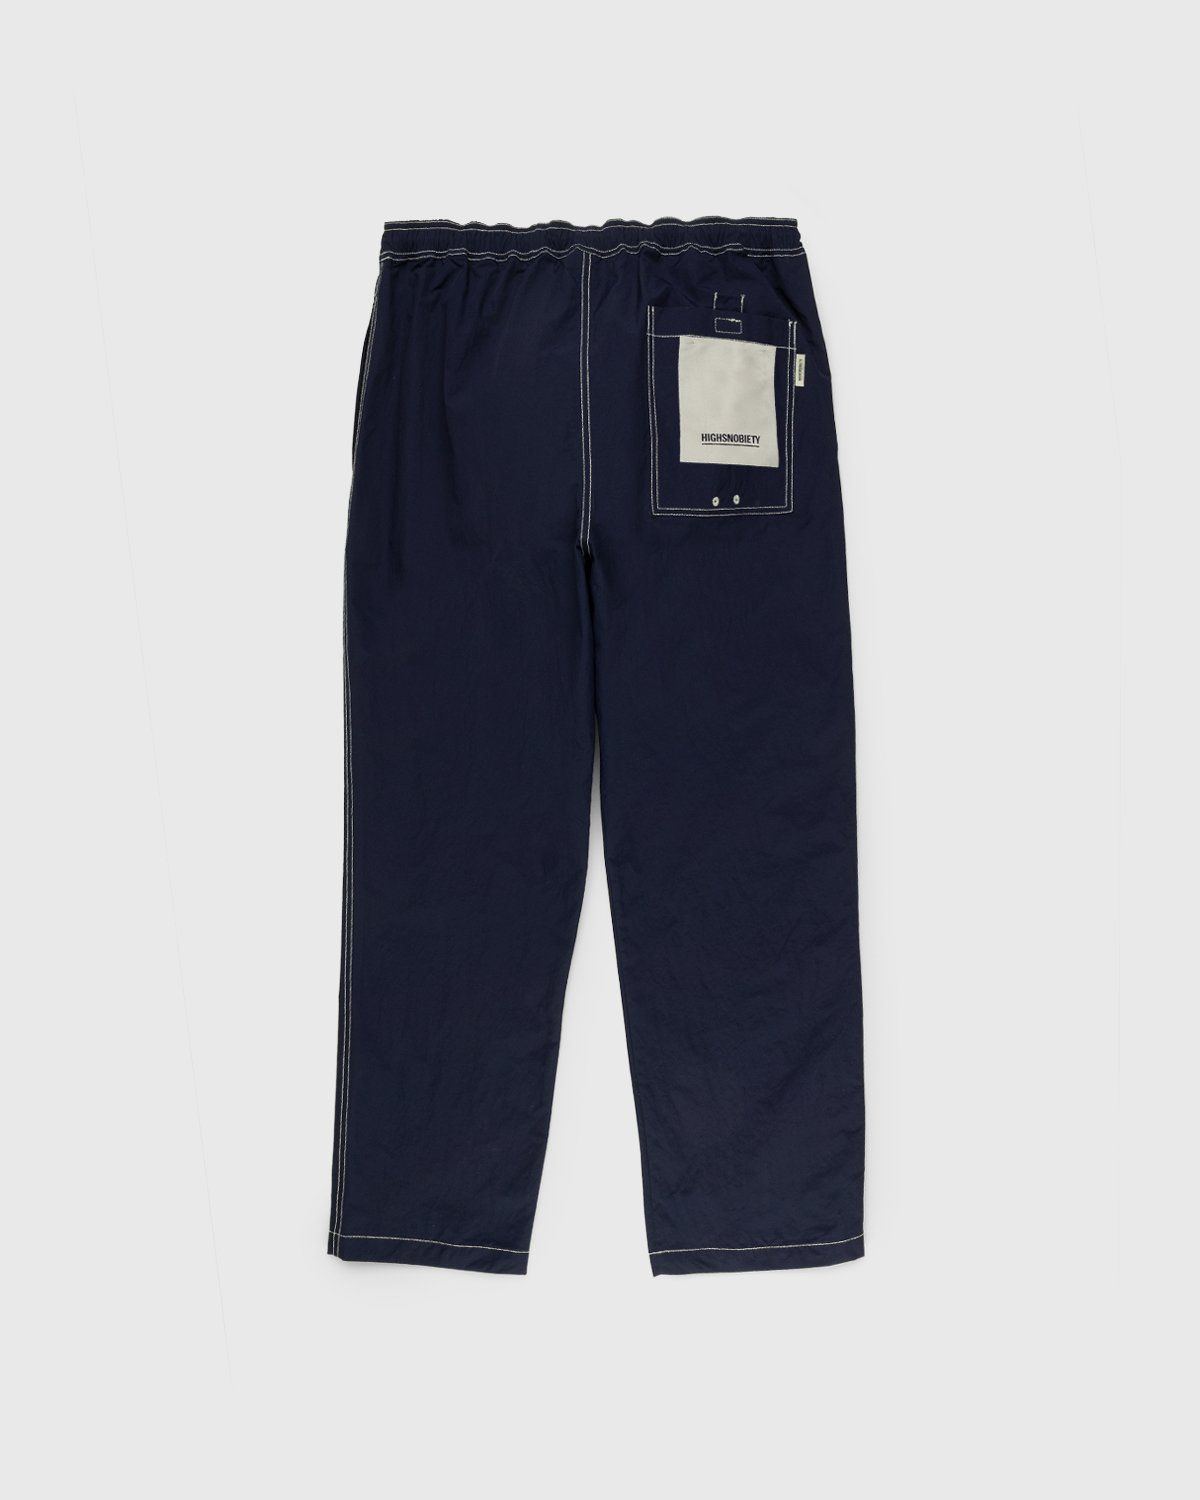 Highsnobiety – Contrast Brushed Nylon Elastic Pants Navy - Active Pants - Blue - Image 2